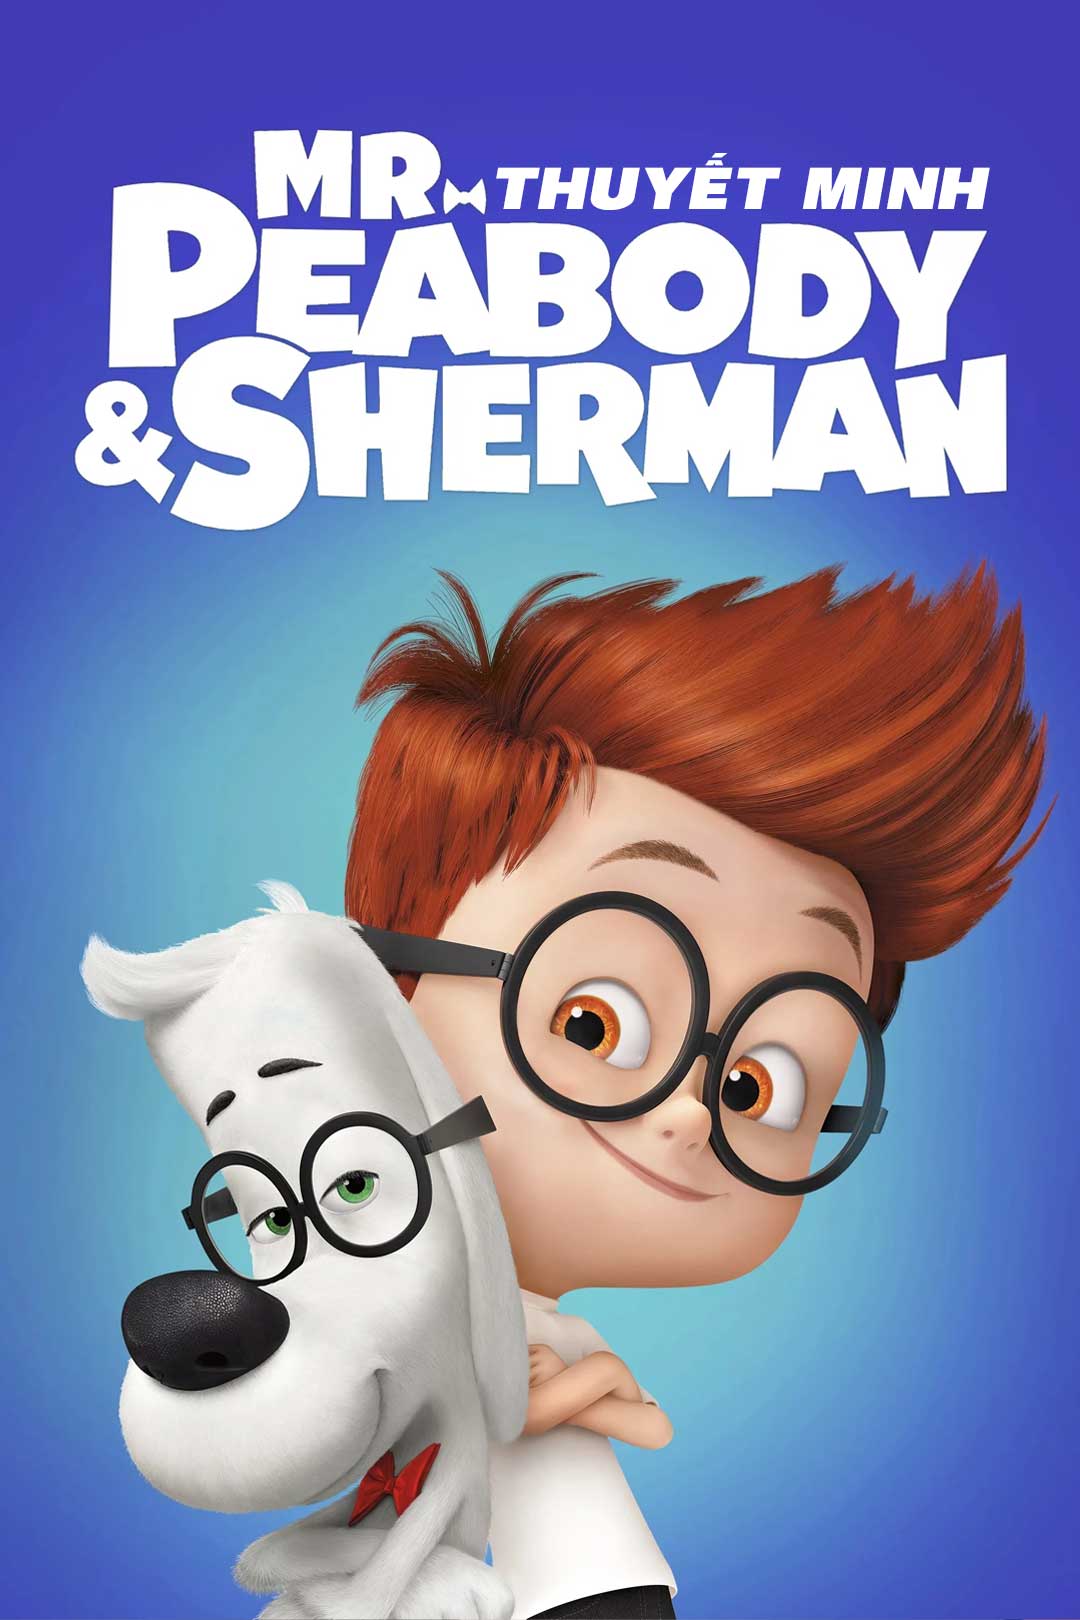 Mr. Peabody & Sherman Thuyết Minh